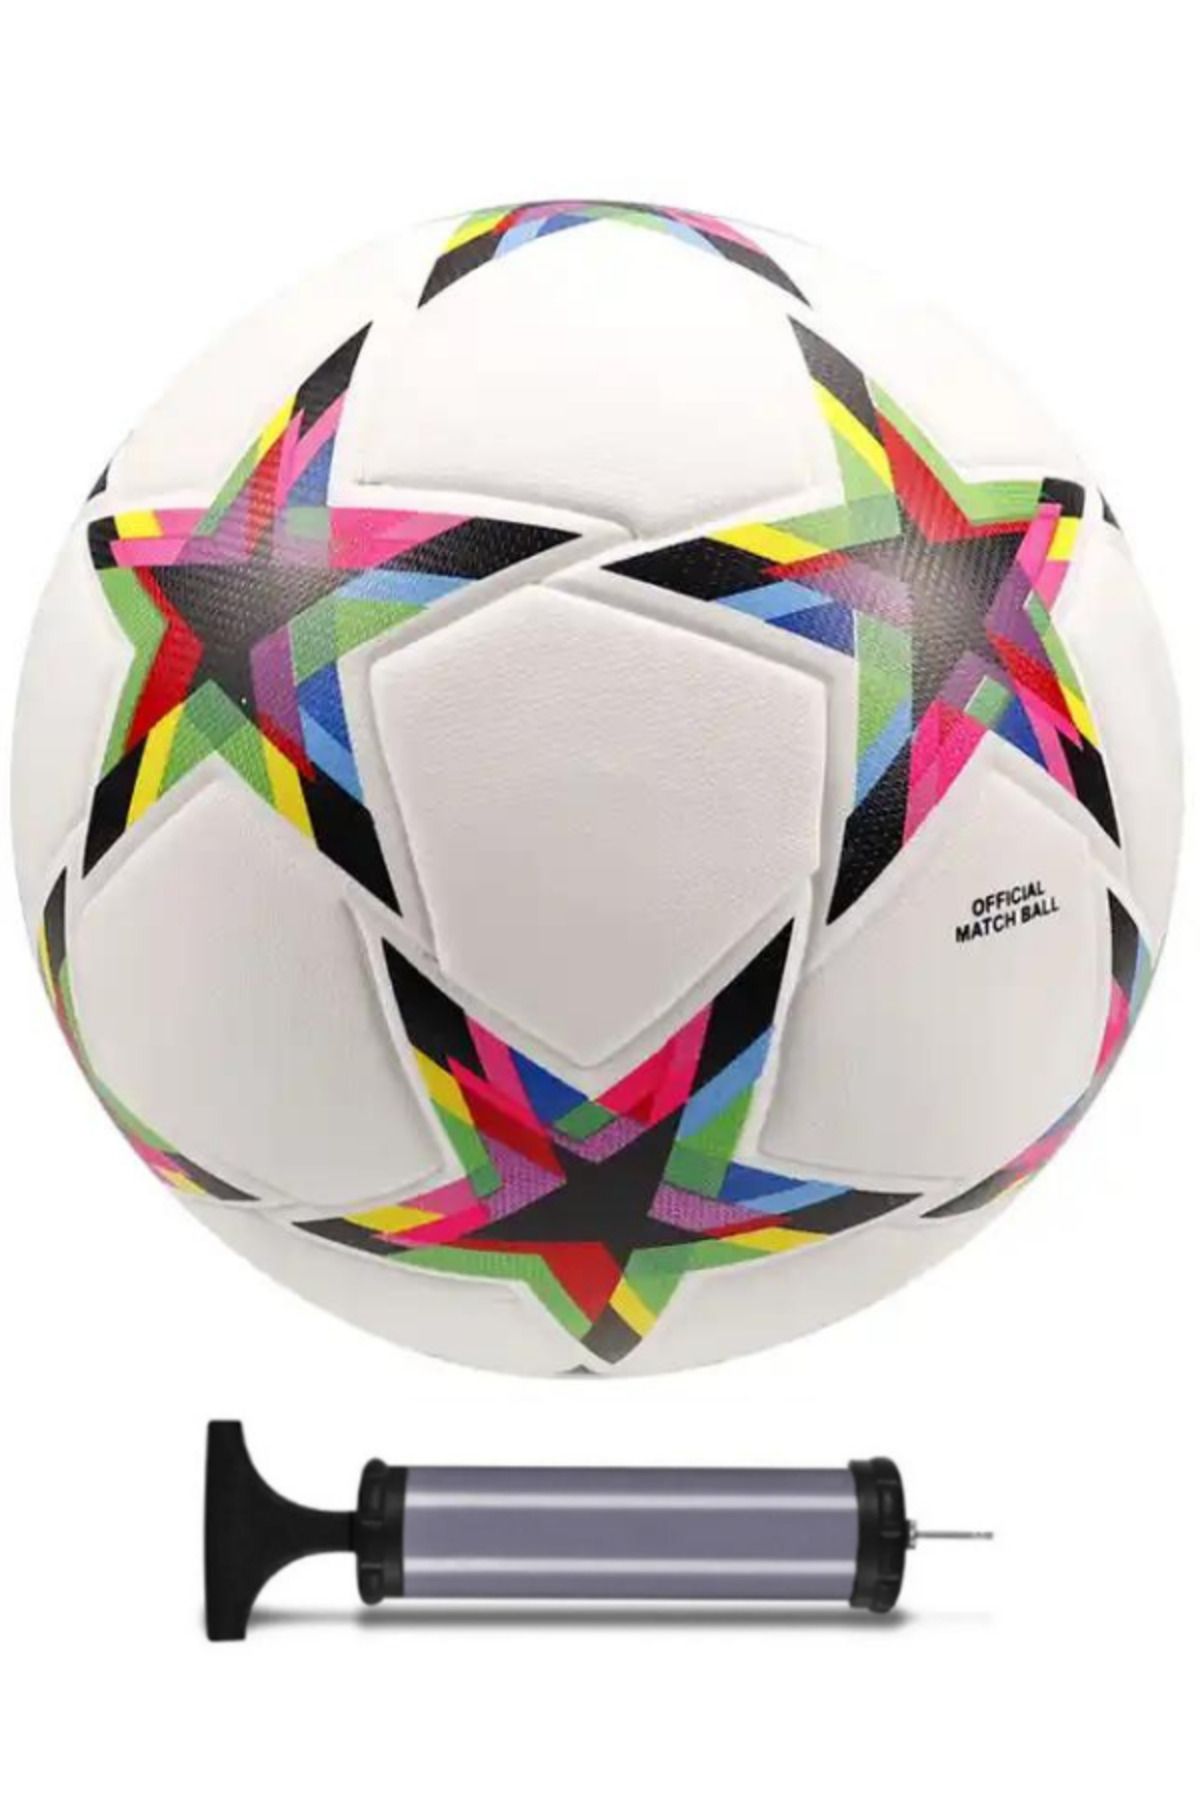 Janissary Şampiyonlar Ligi Tasarımı Futbol Topu, 5 Numara, Halı Saha Topu, Maç Topu + Pompa